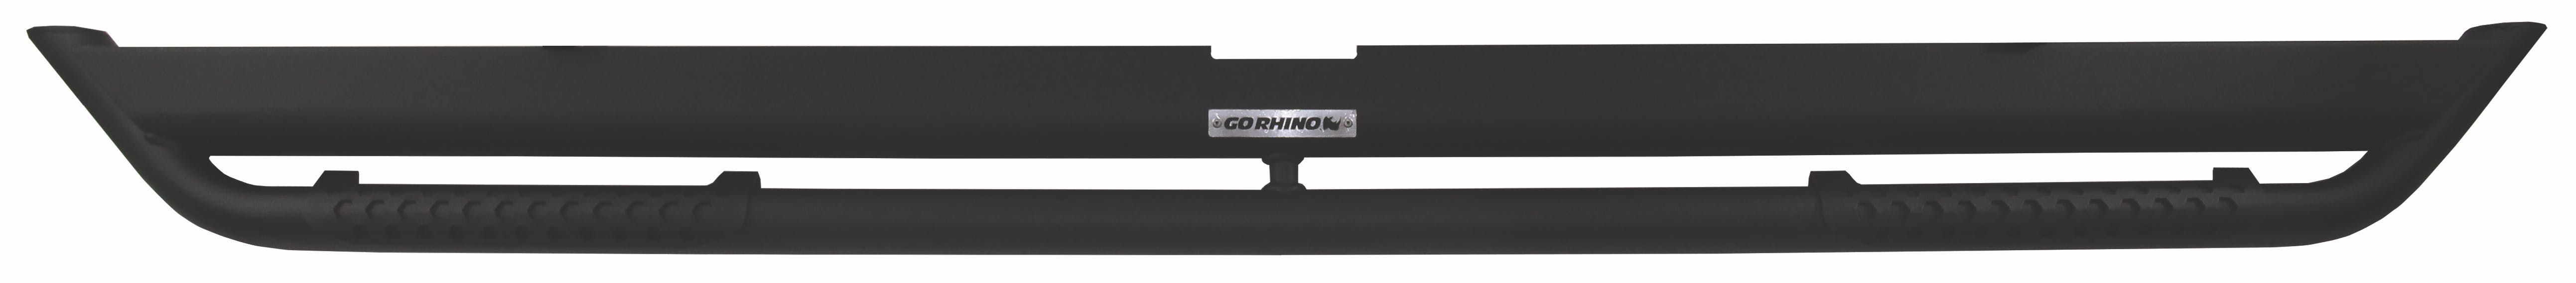 Go Rhino DS60052T Dominator Extreme DS Sliders